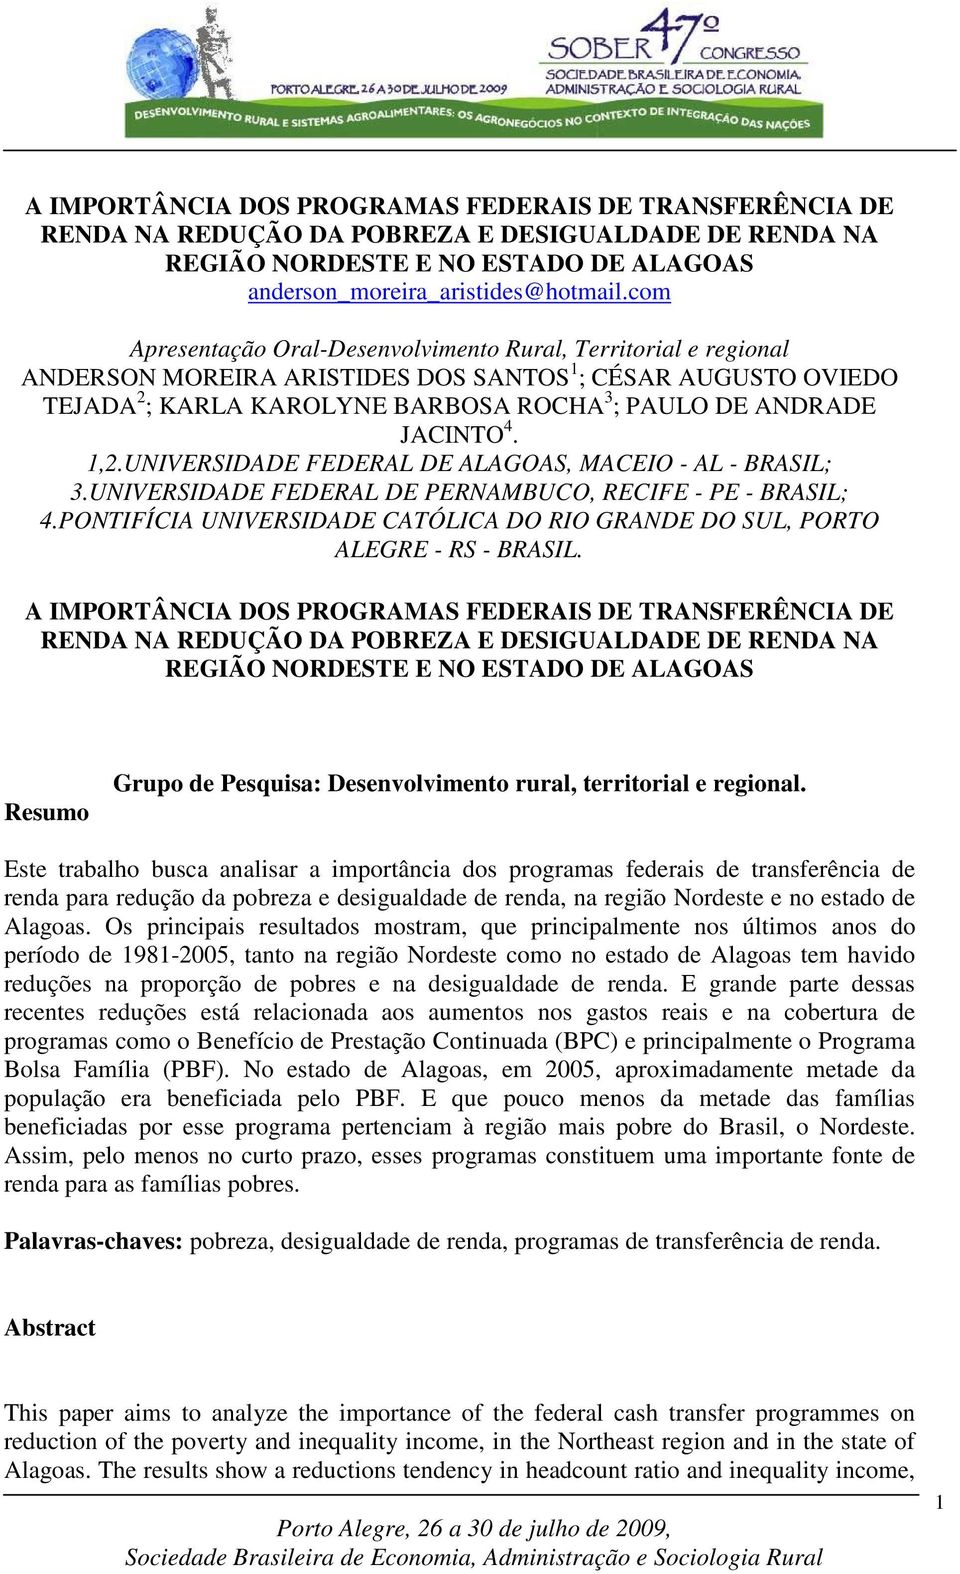 4. 1,2.UNIVERSIDADE FEDERAL DE ALAGOAS, MACEIO - AL - BRASIL; 3.UNIVERSIDADE FEDERAL DE PERNAMBUCO, RECIFE - PE - BRASIL; 4.